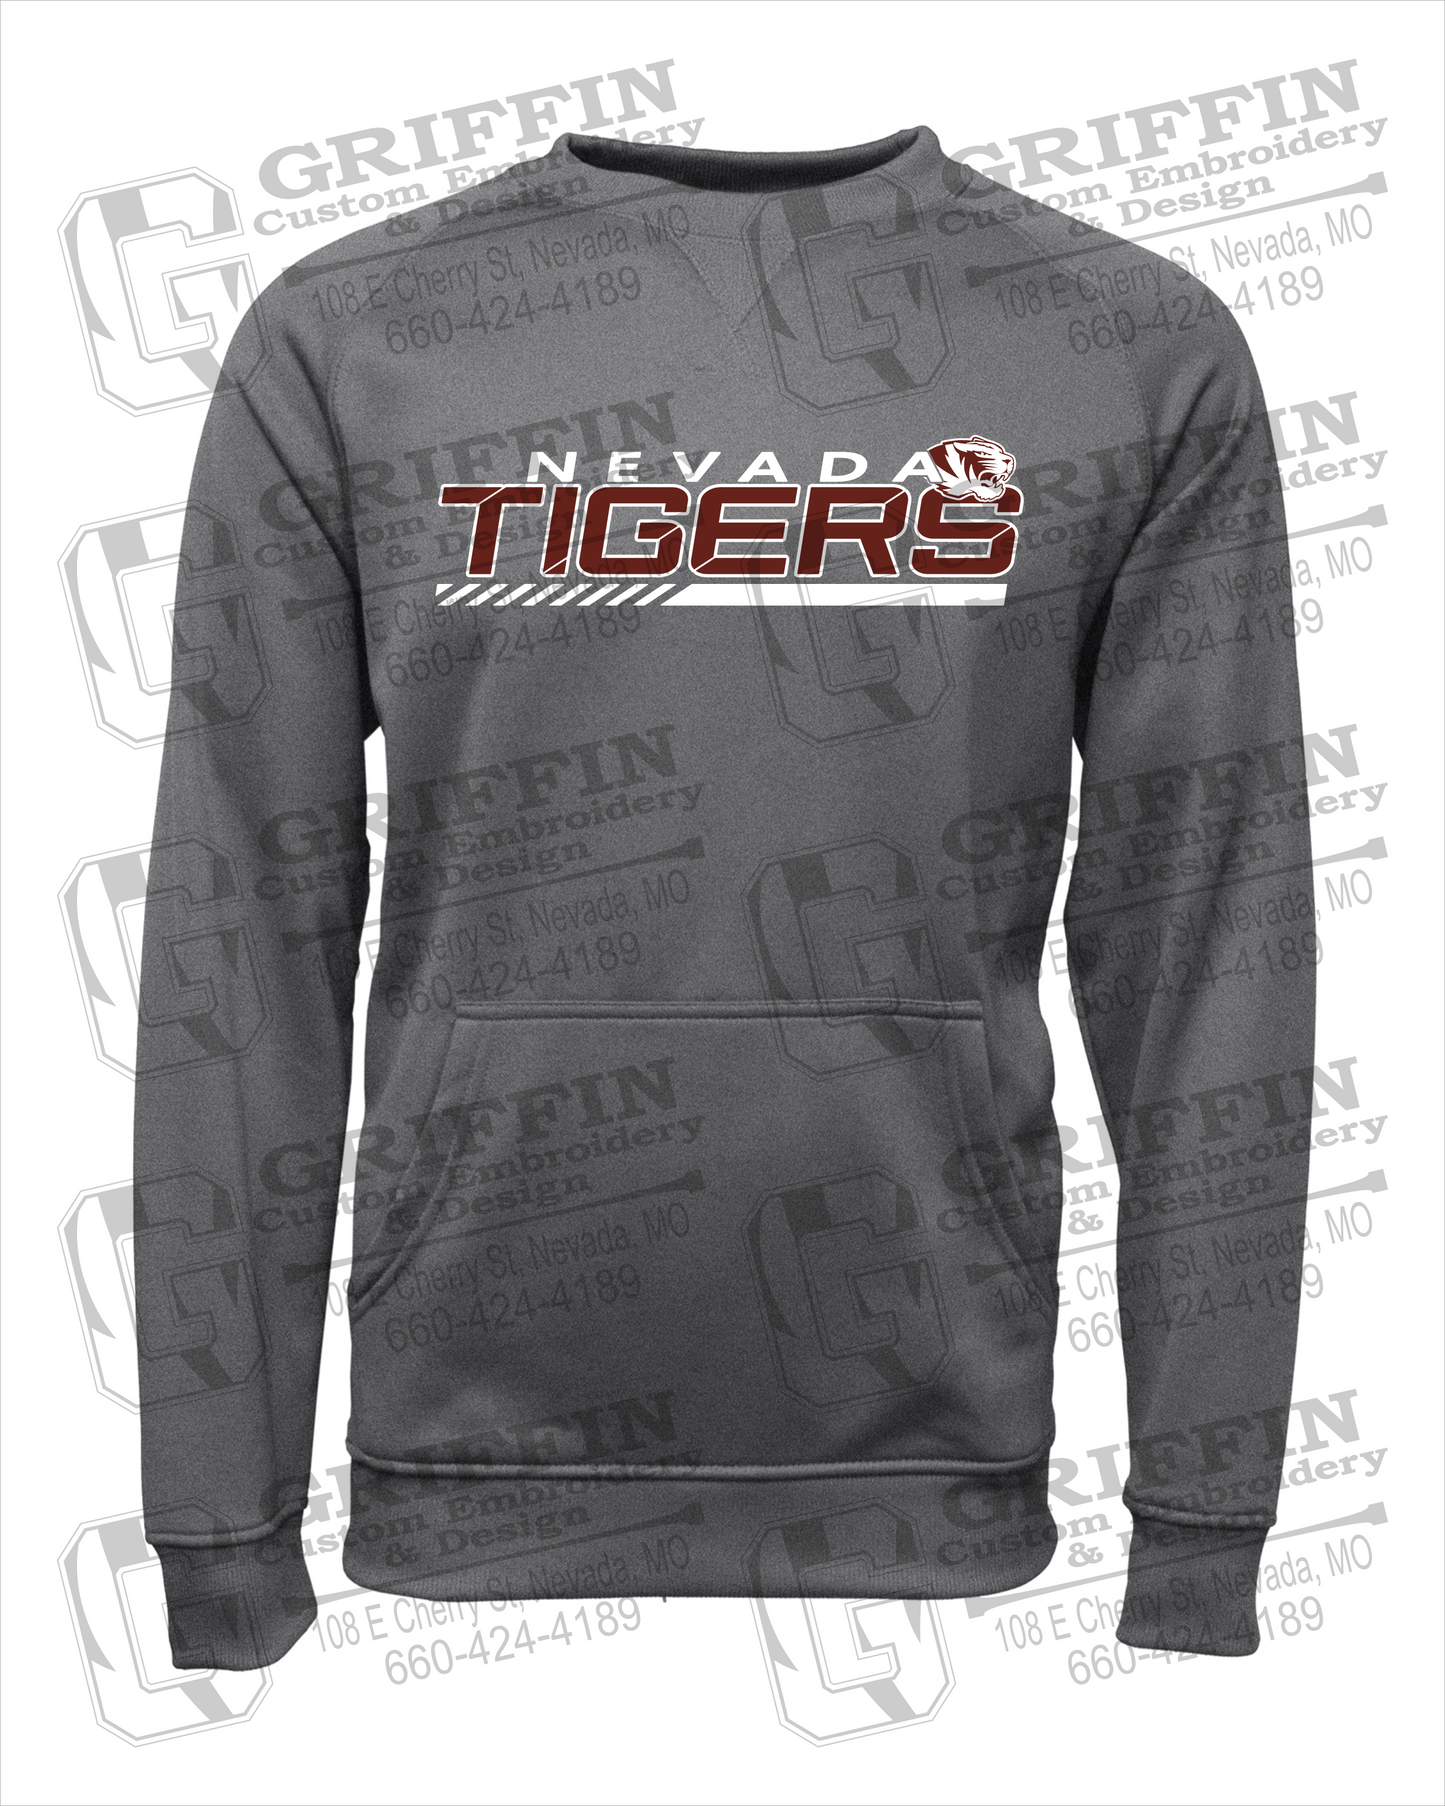 Nevada Tigers 22-E Sweatshirt